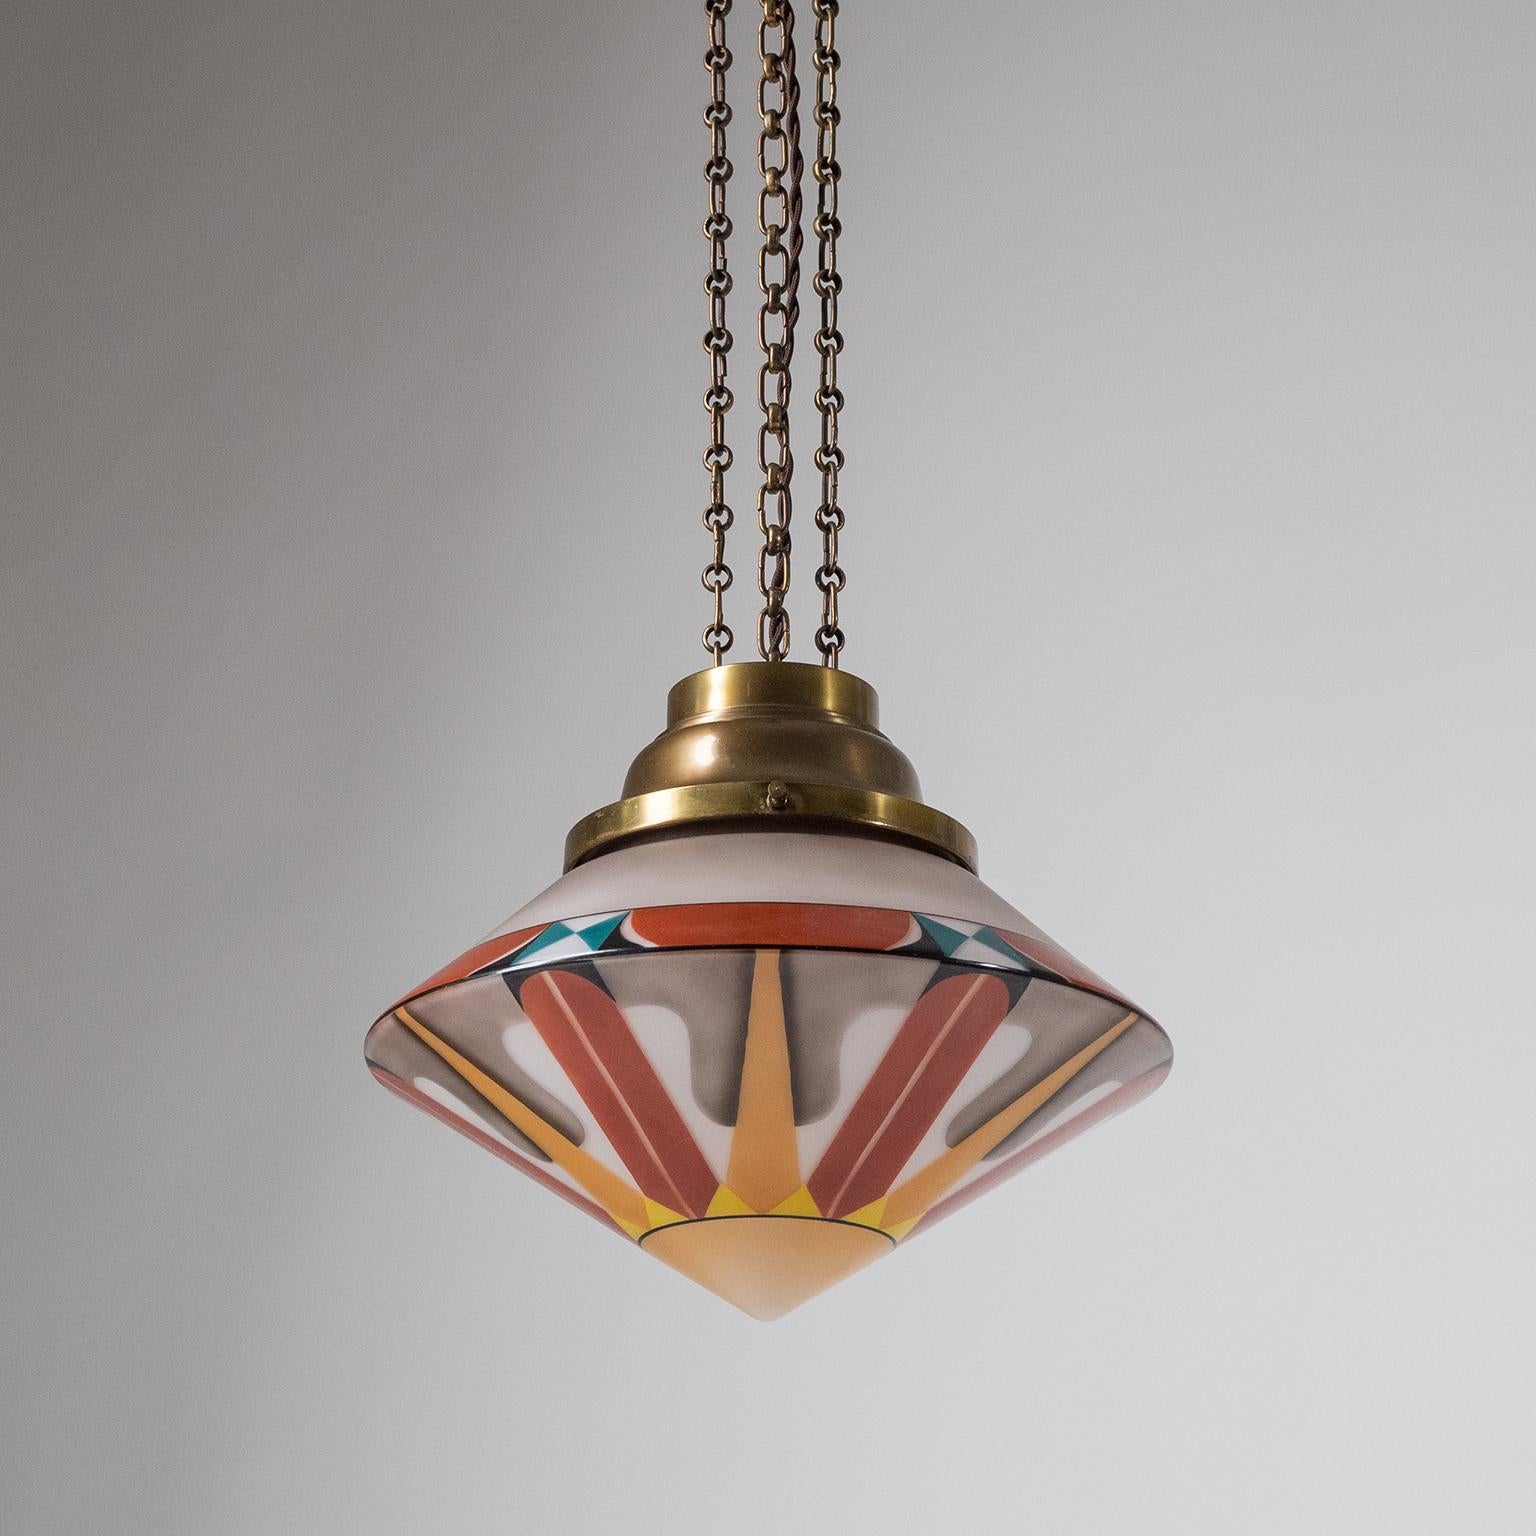 German Rare Art Deco Suspension Light, 1920s, Enameled Glass